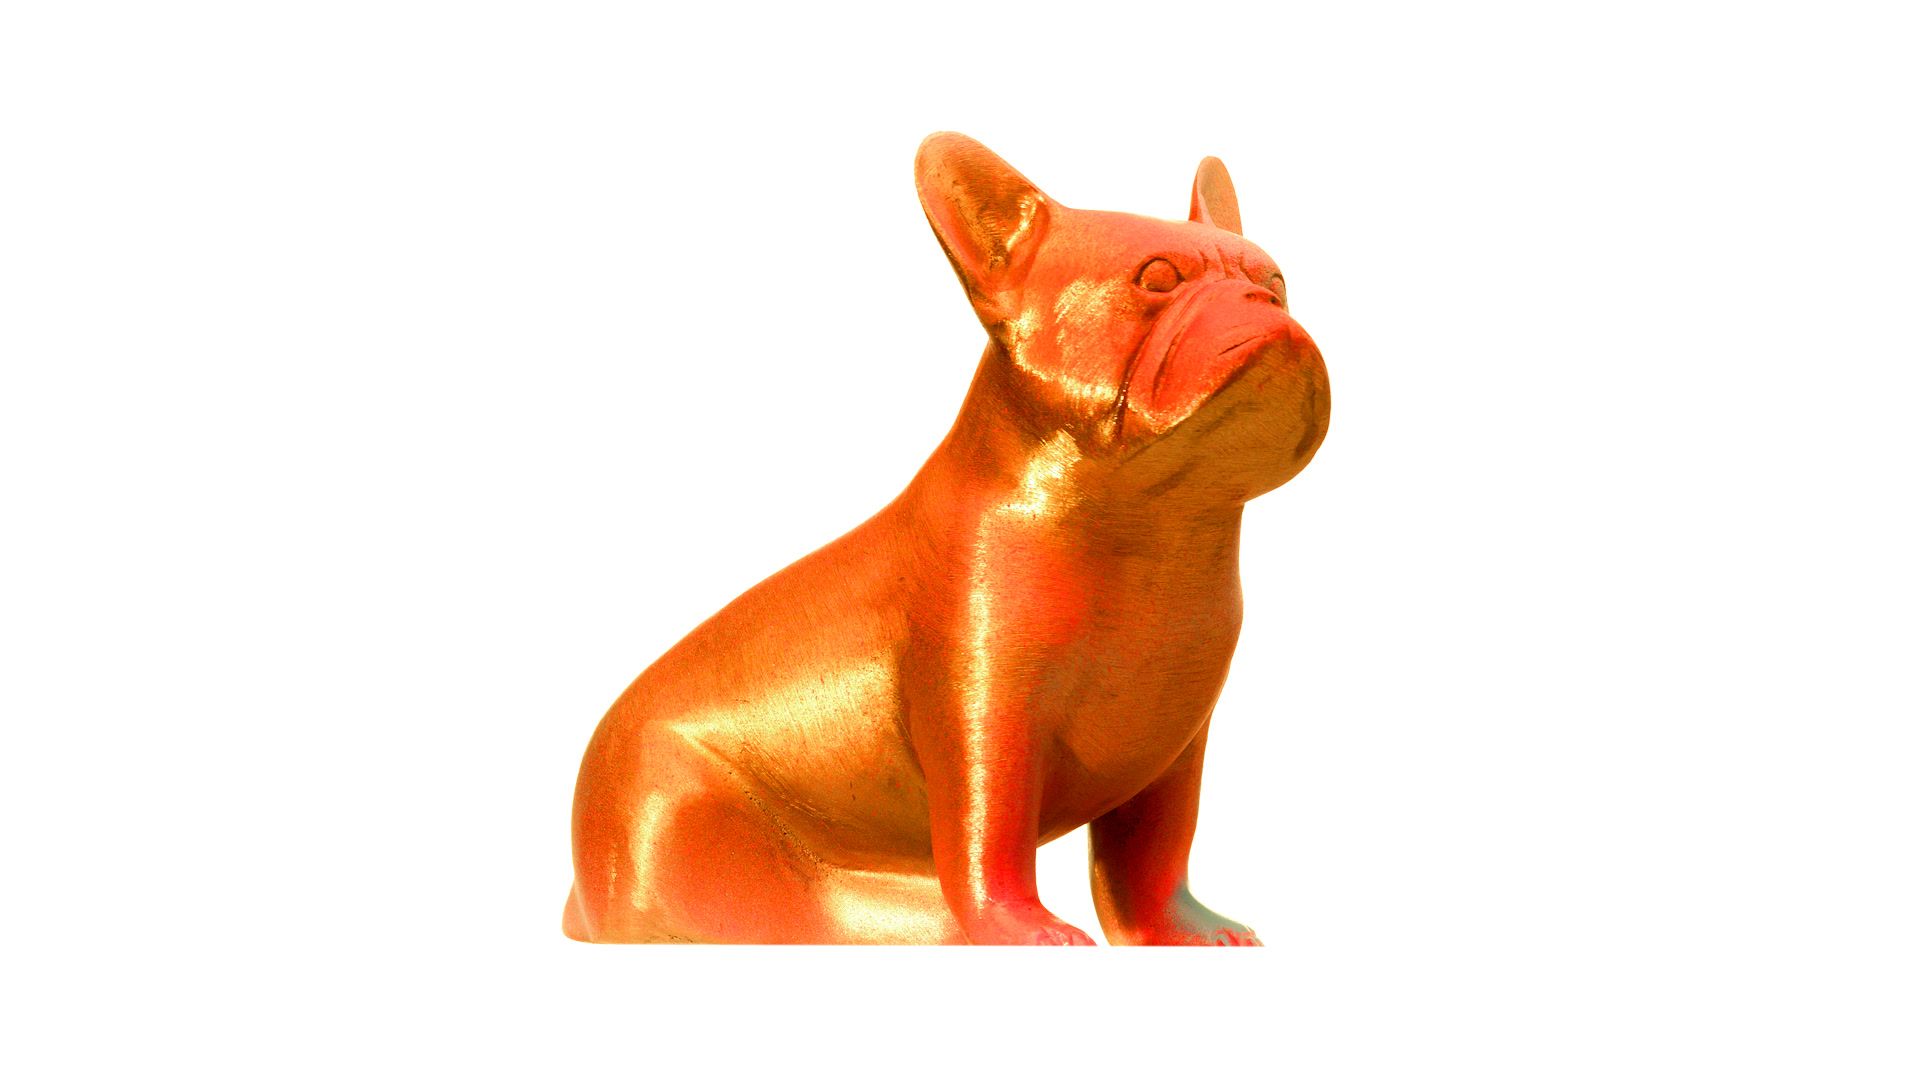 Julien MARINETTI 犬只约翰

2022年（生产年份）

2004年（创建年份）

铜质

在青铜器上加压涂抹金色涂料和莫洛托夫丙烯酸涂料，并进行&hellip;